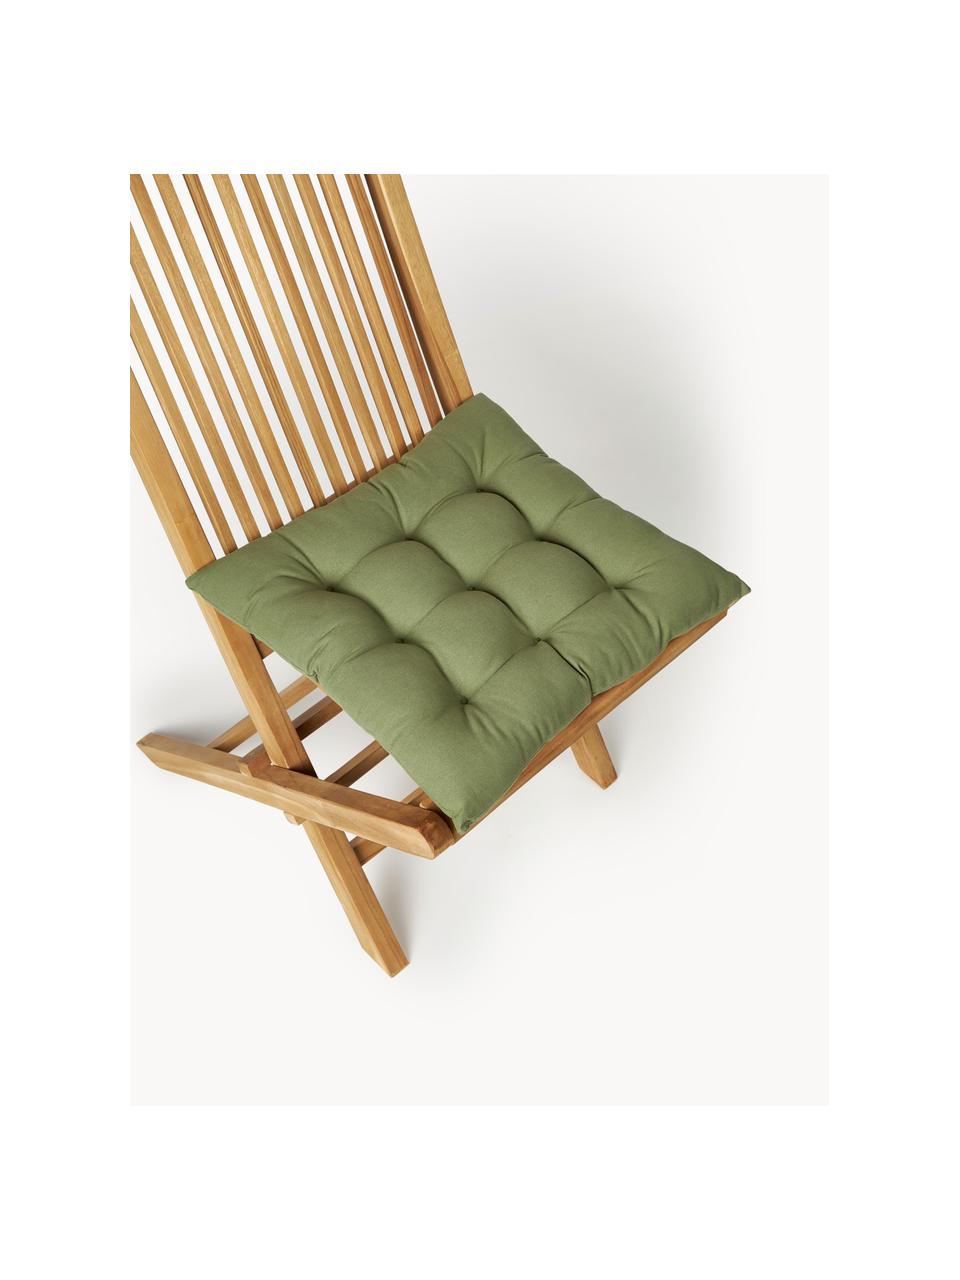 Cojines de asiento Ava, 2 uds., Funda: 100% algodón, Verde oliva, An 40 x L 40 cm